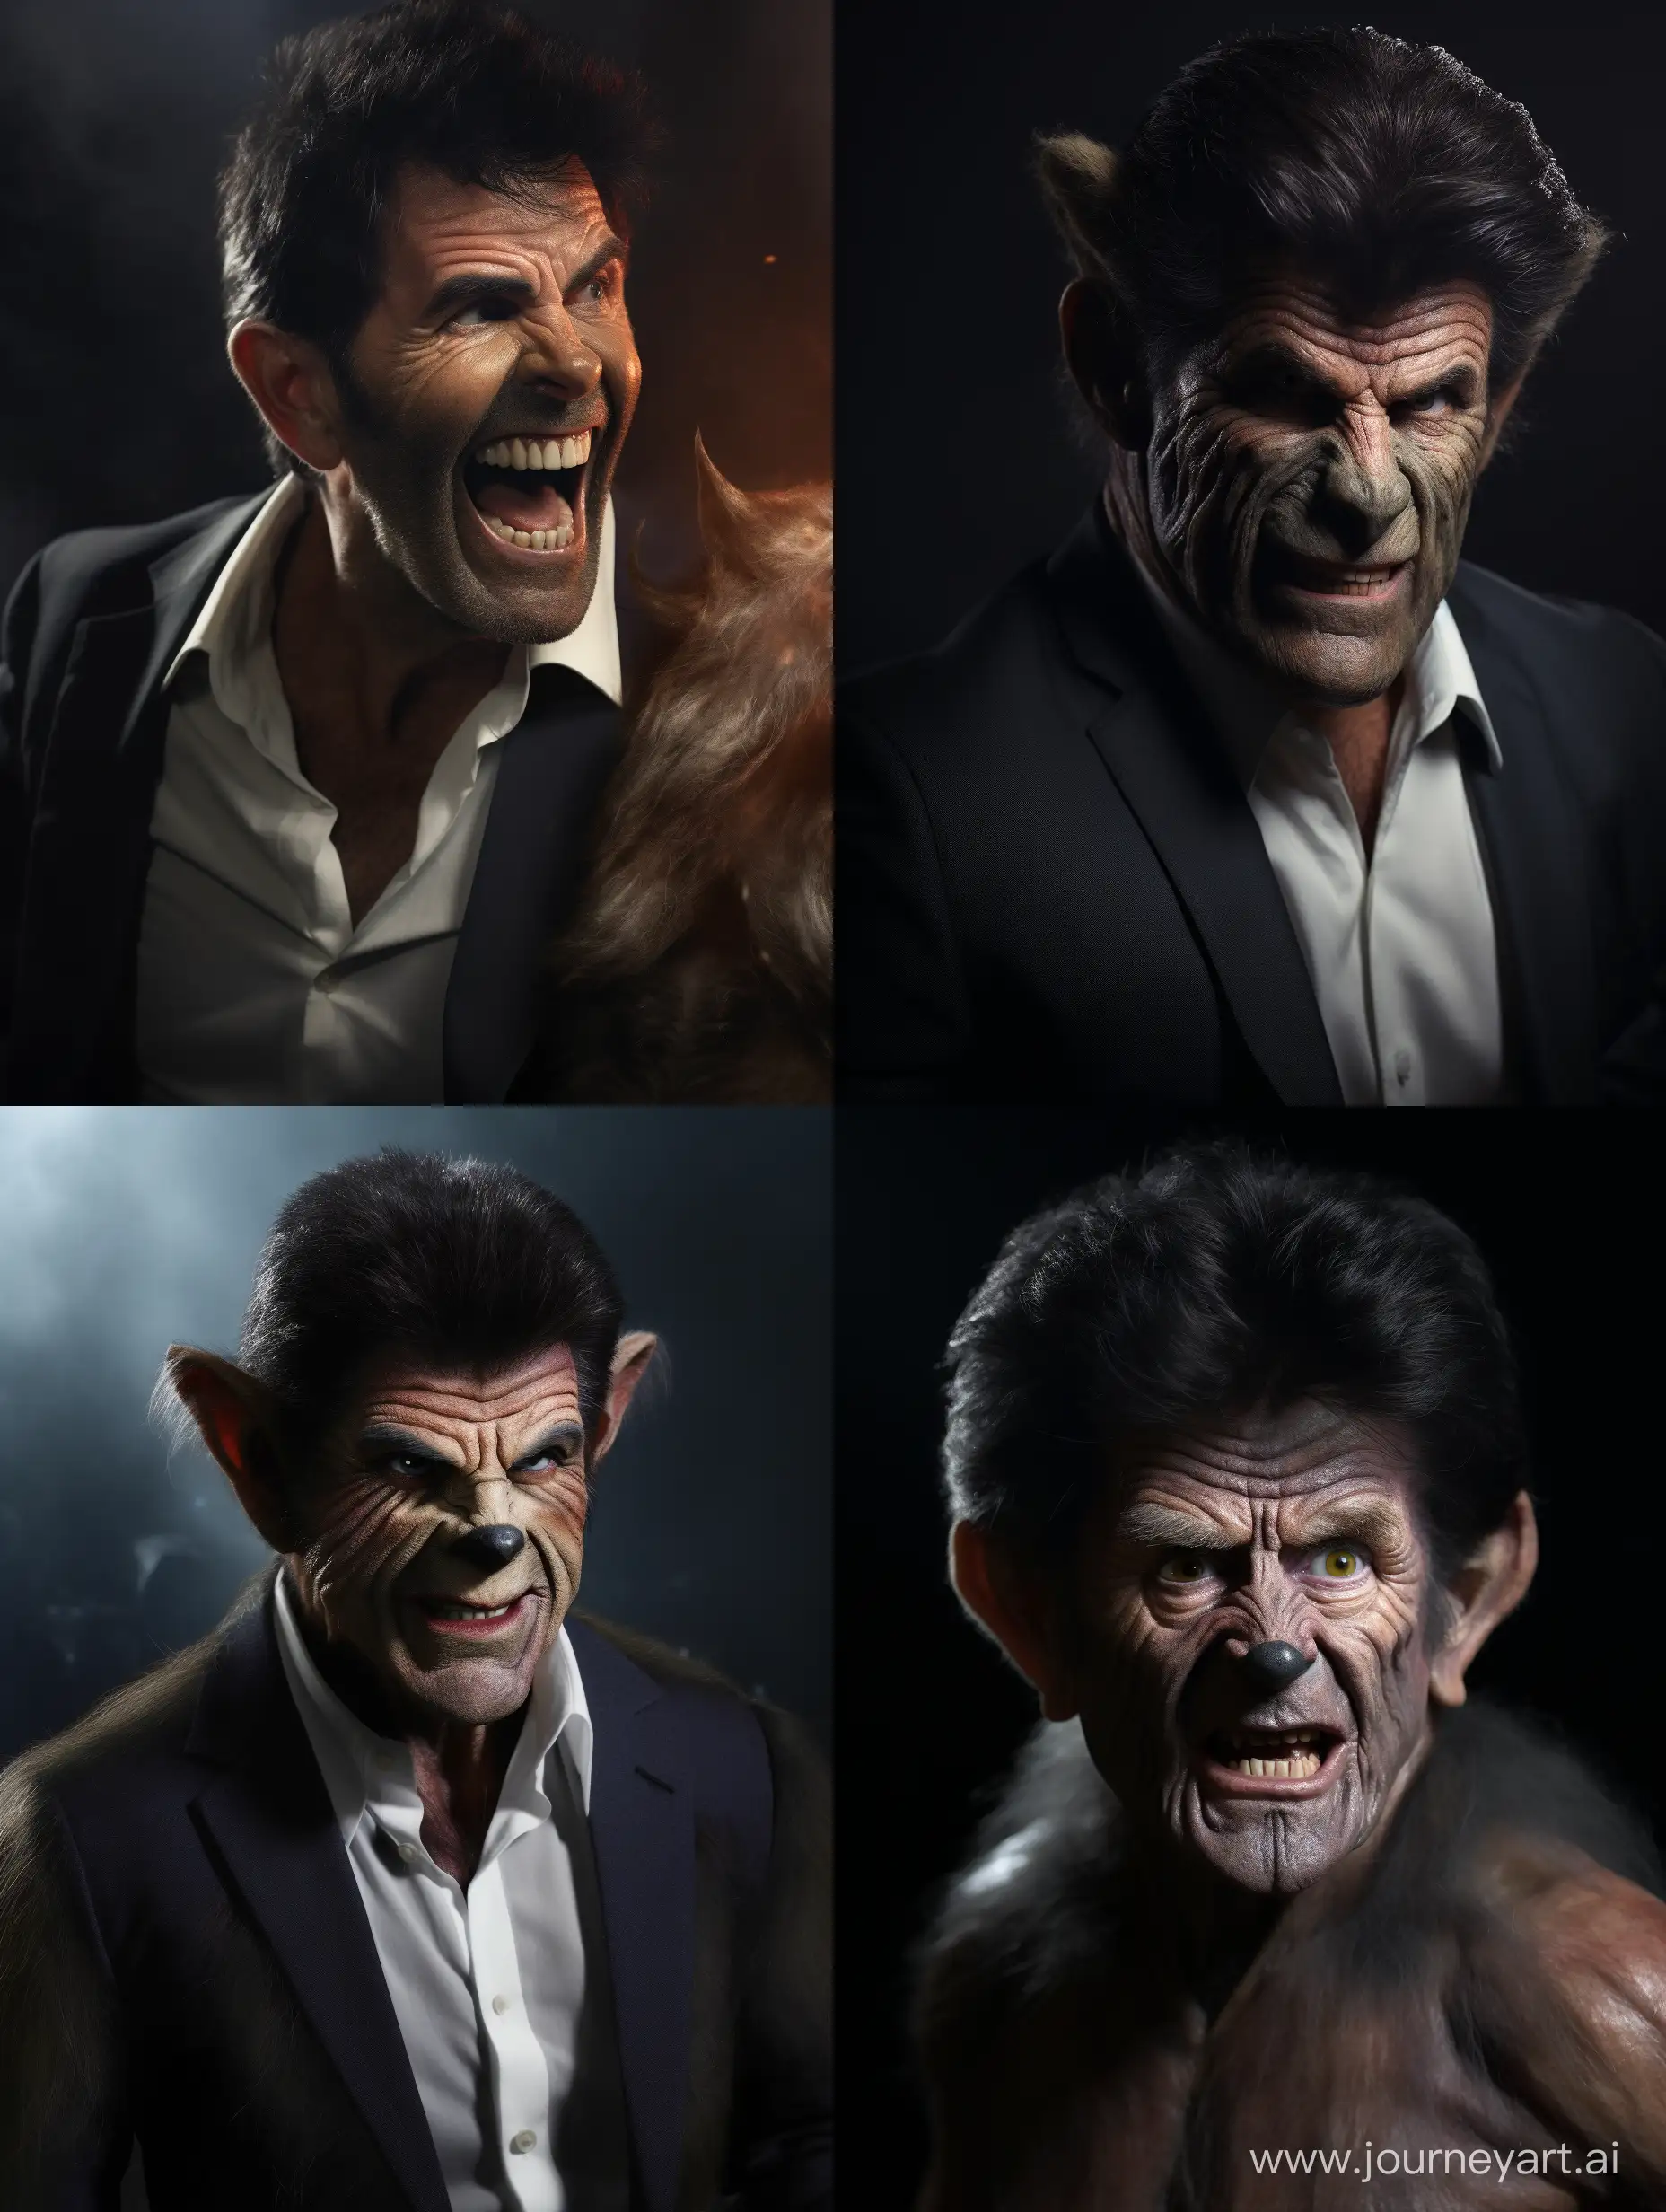 simon cowell as a werewolf, transformation.